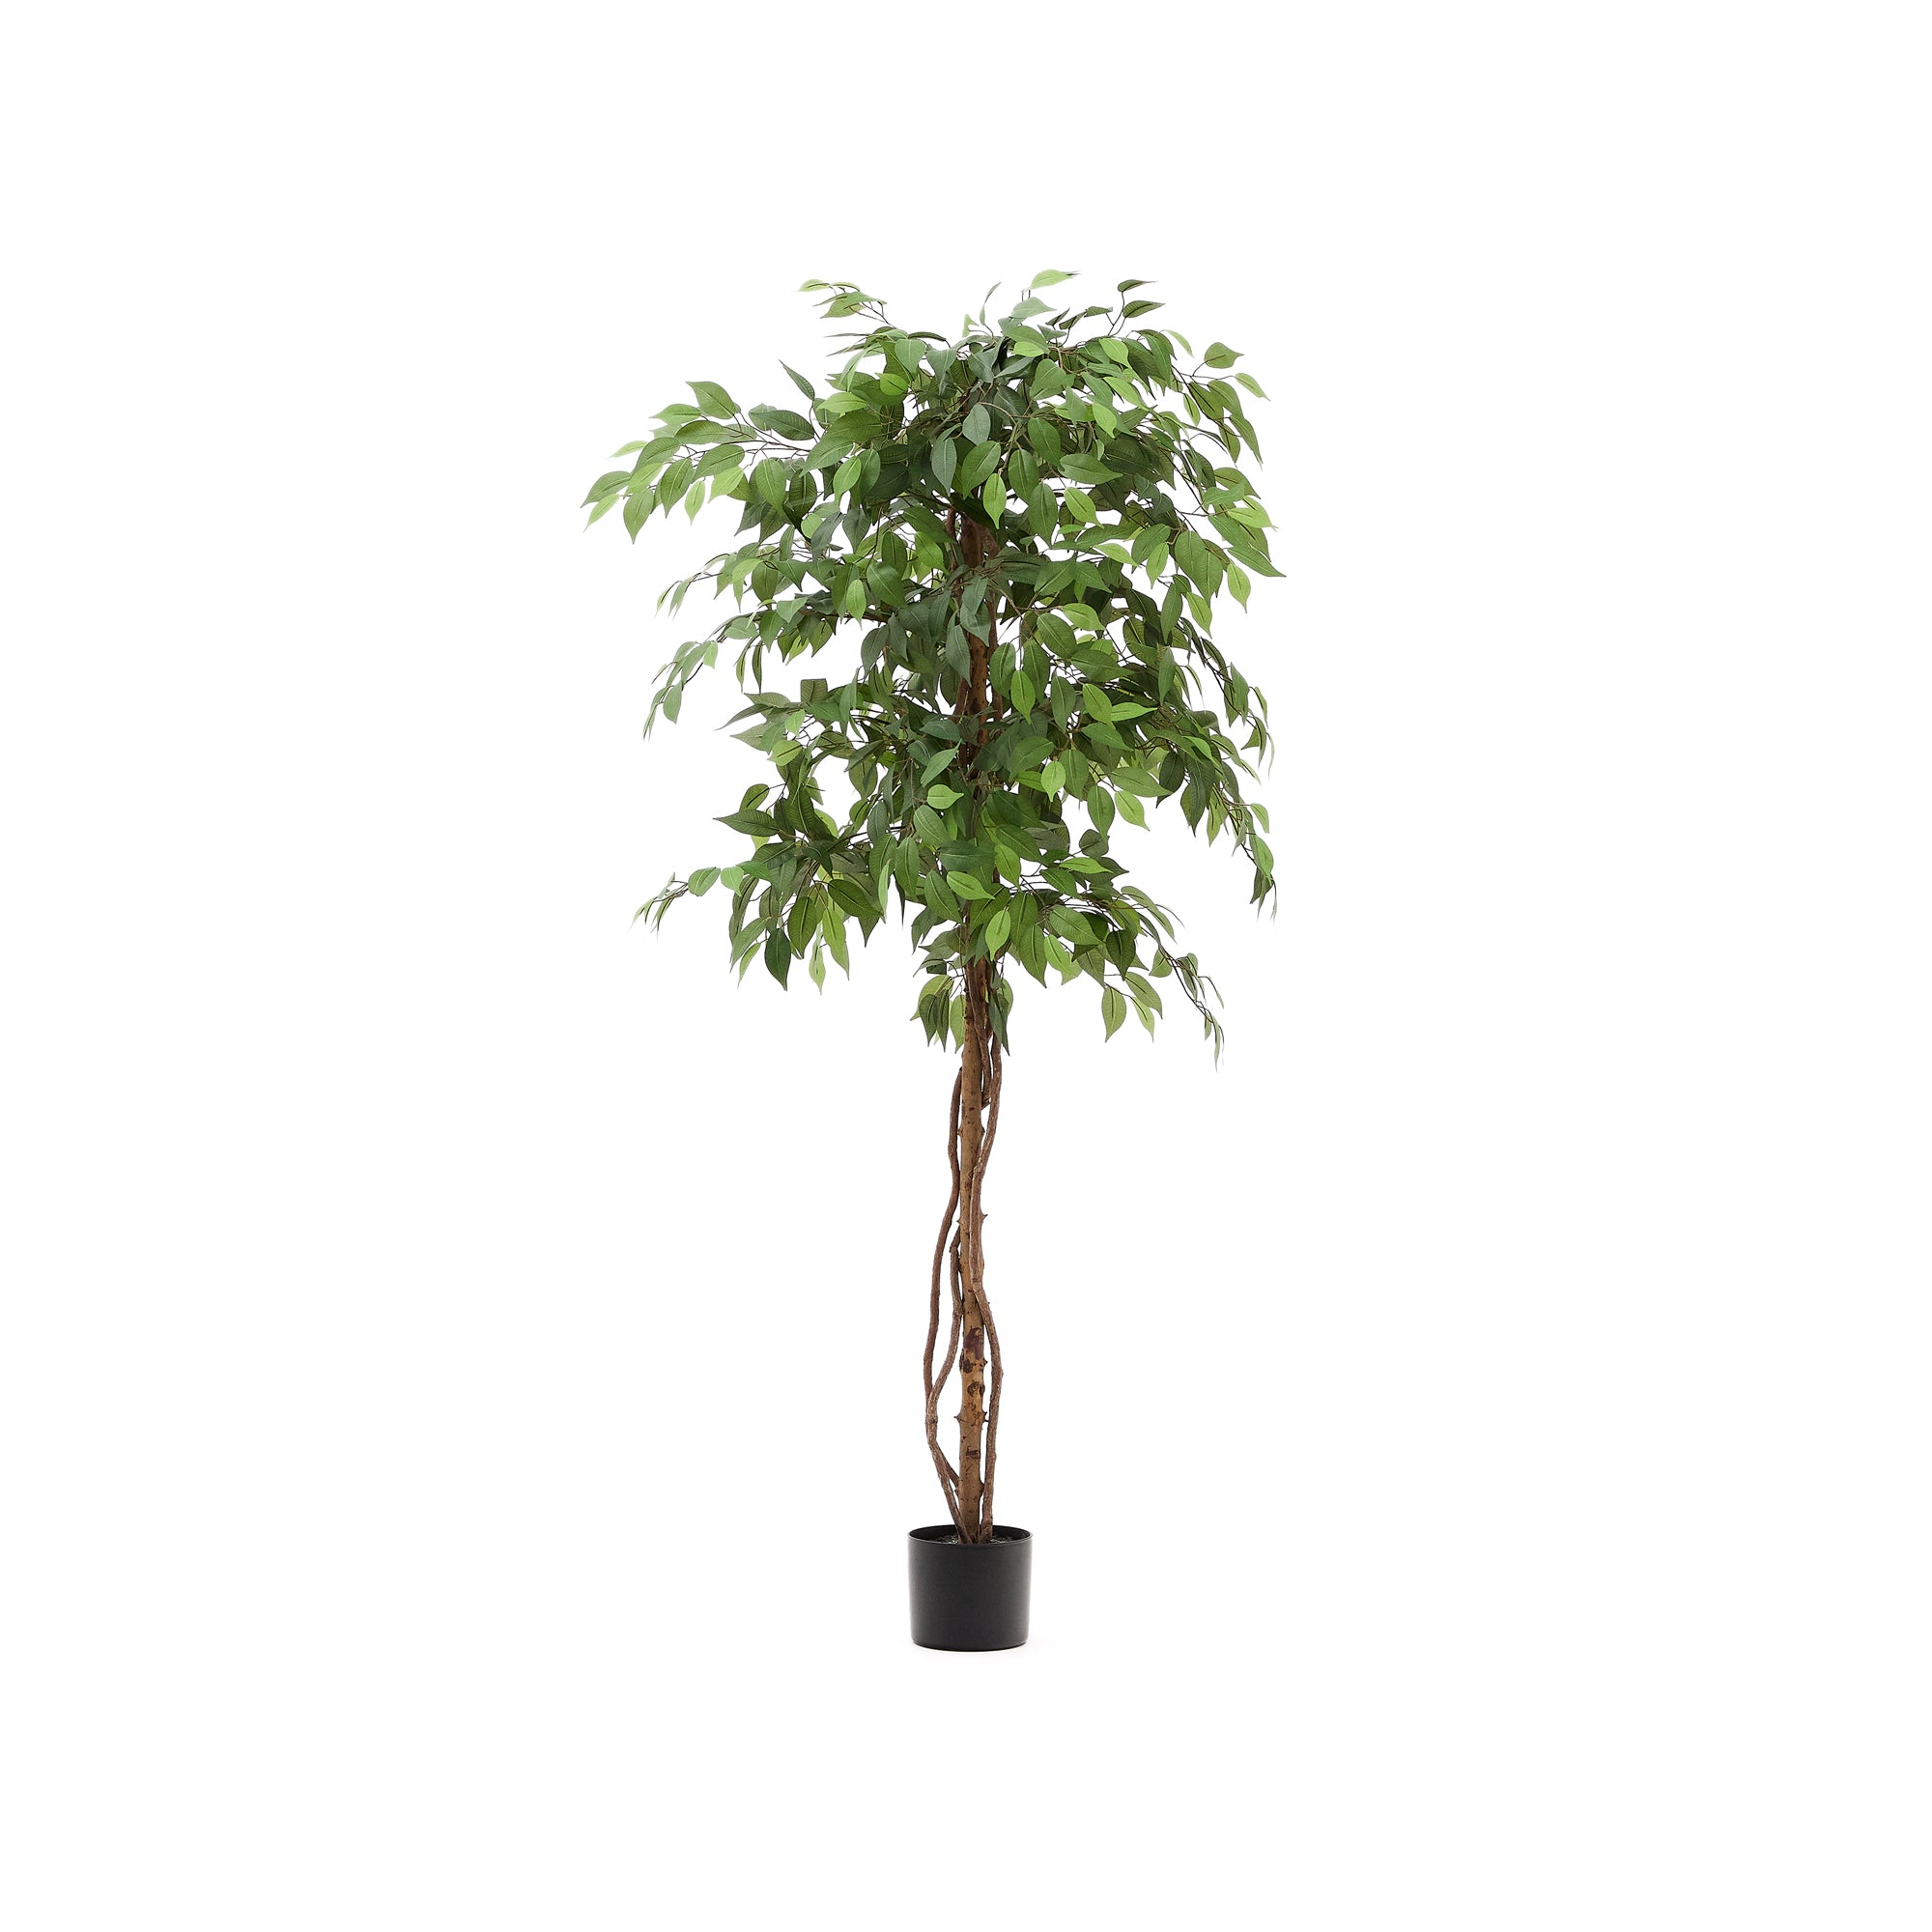 Artificial Ficus tree in black pot 180 cm